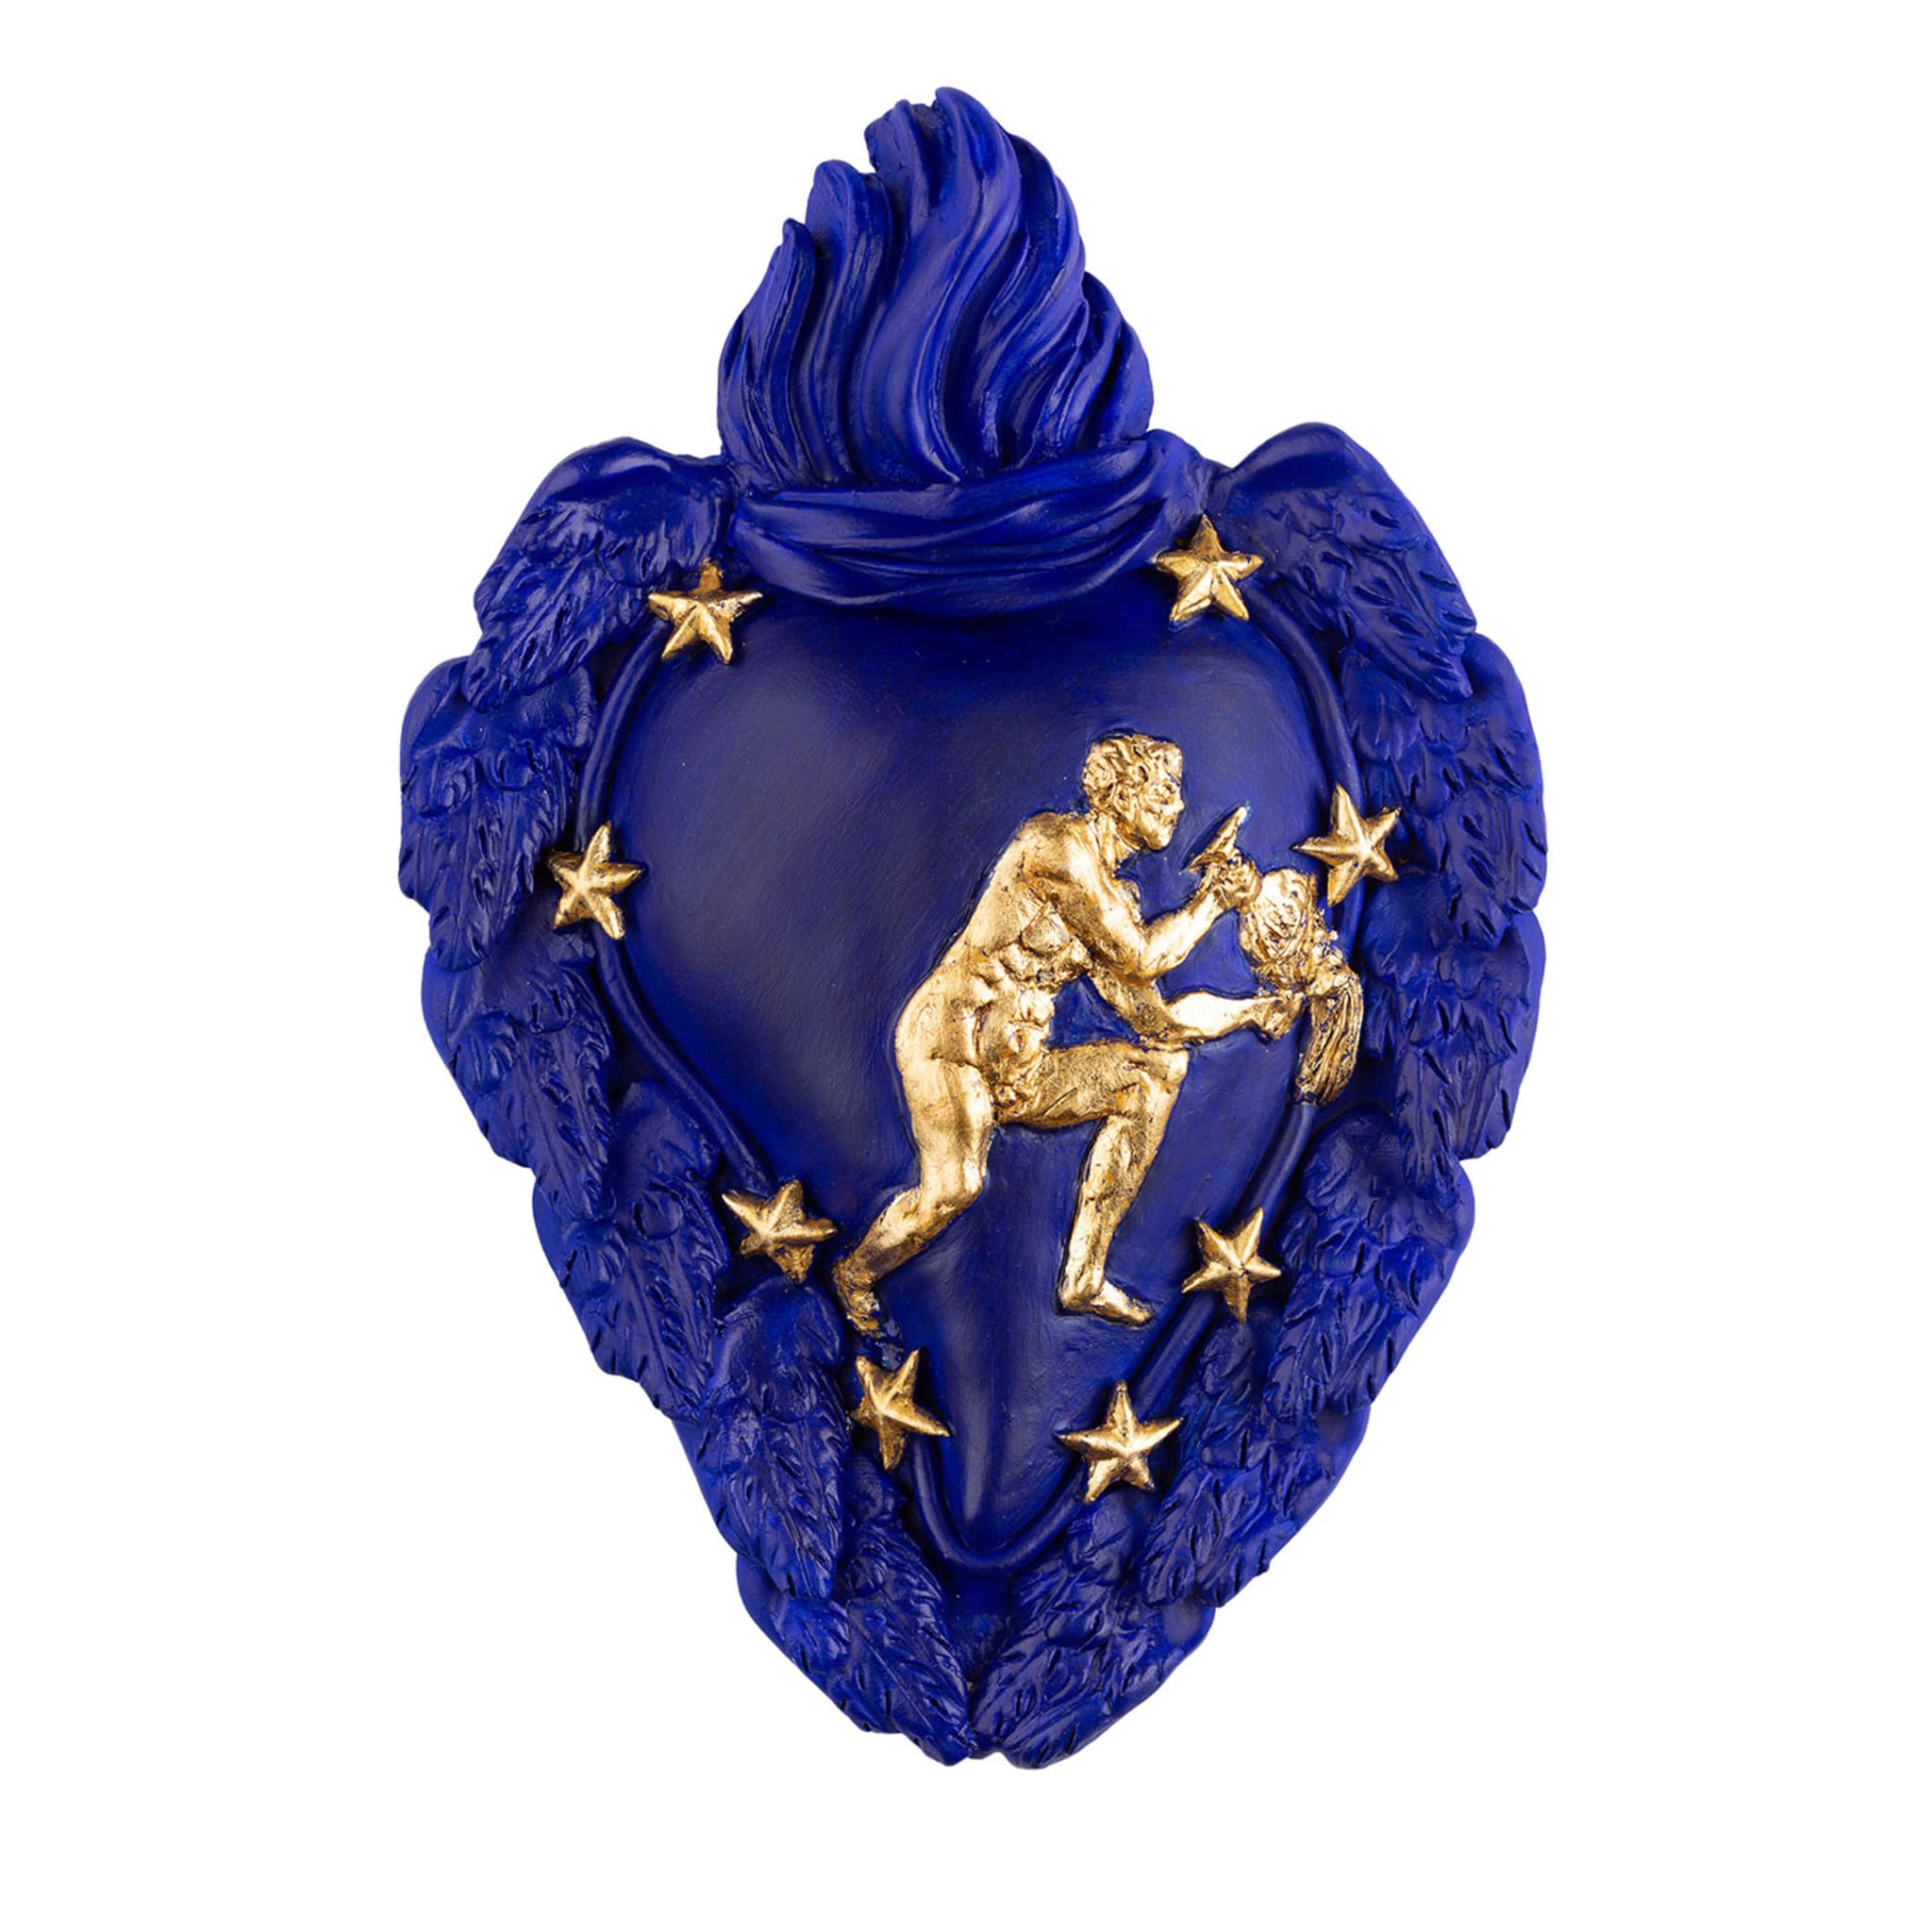 Zodiaco Aquarius Ceramic Heart - Main view